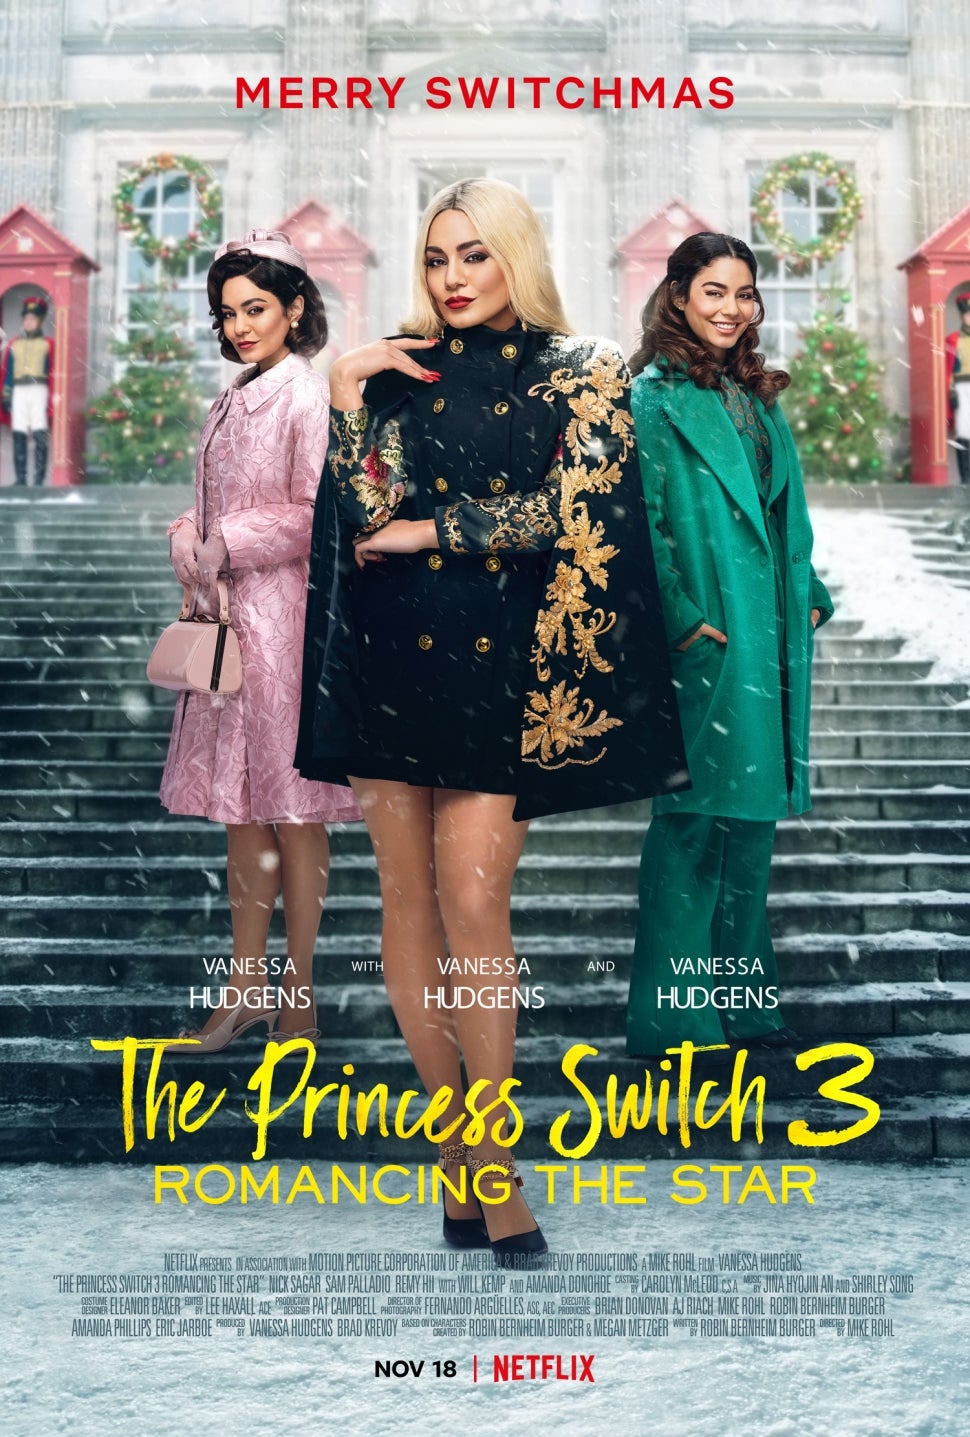 'The Princess Switch 3'